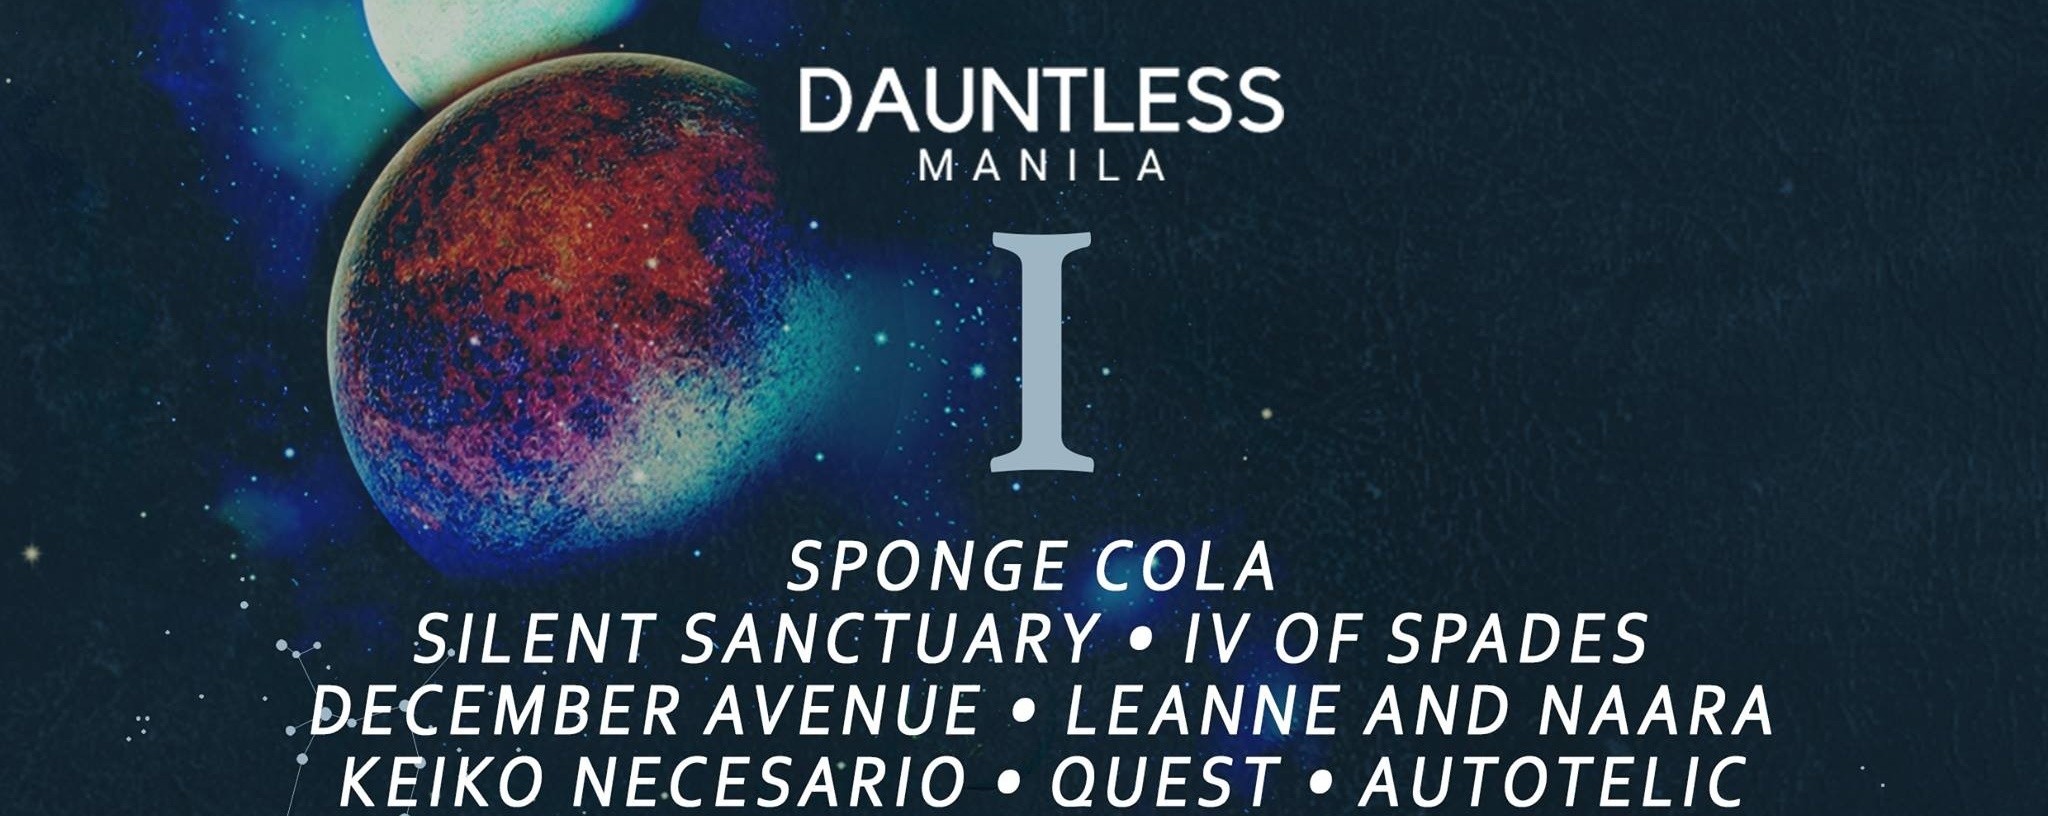 Dauntless Manila: I